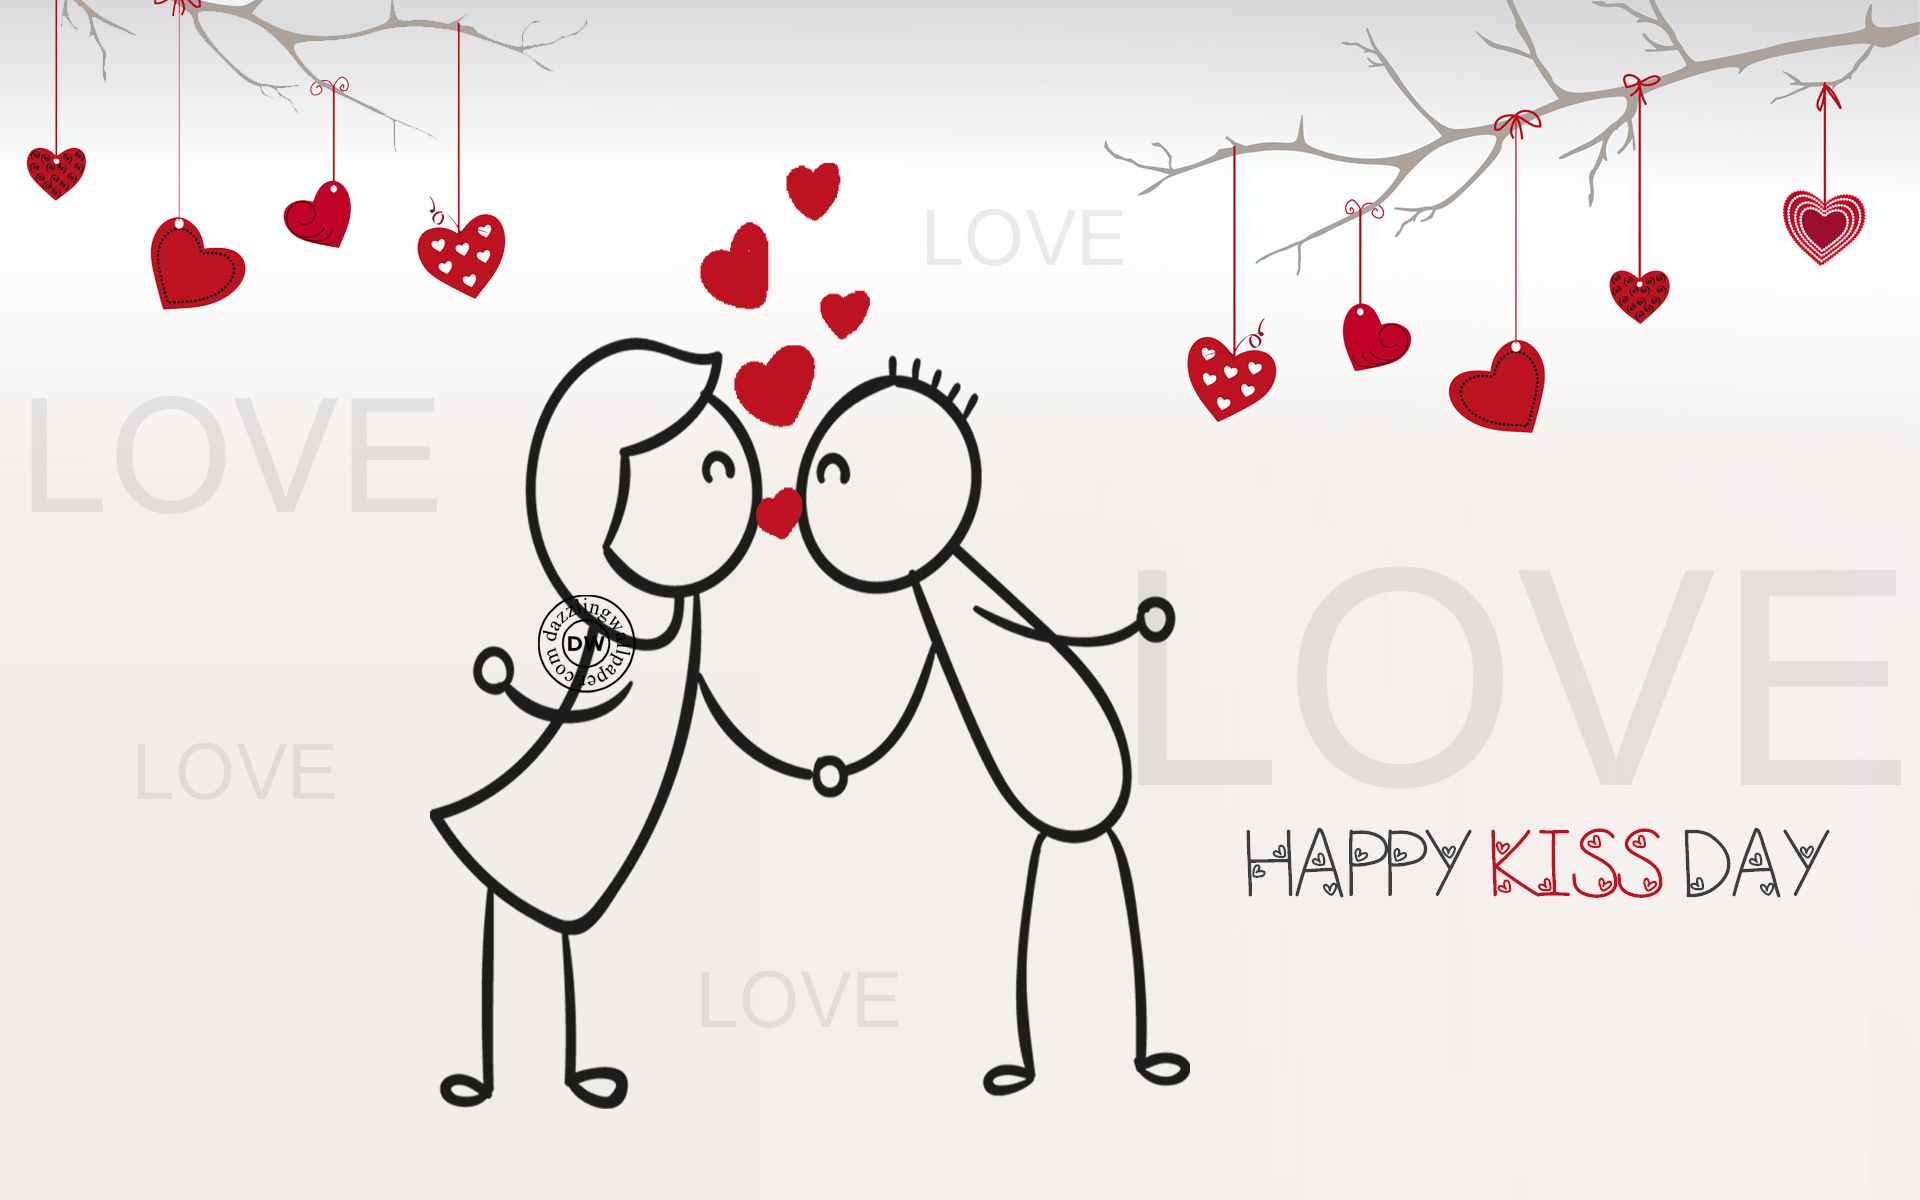 Download Kiss Wallpaper, Kiss Day E-greetings, Friendship - Kiss Day 13 February - HD Wallpaper 